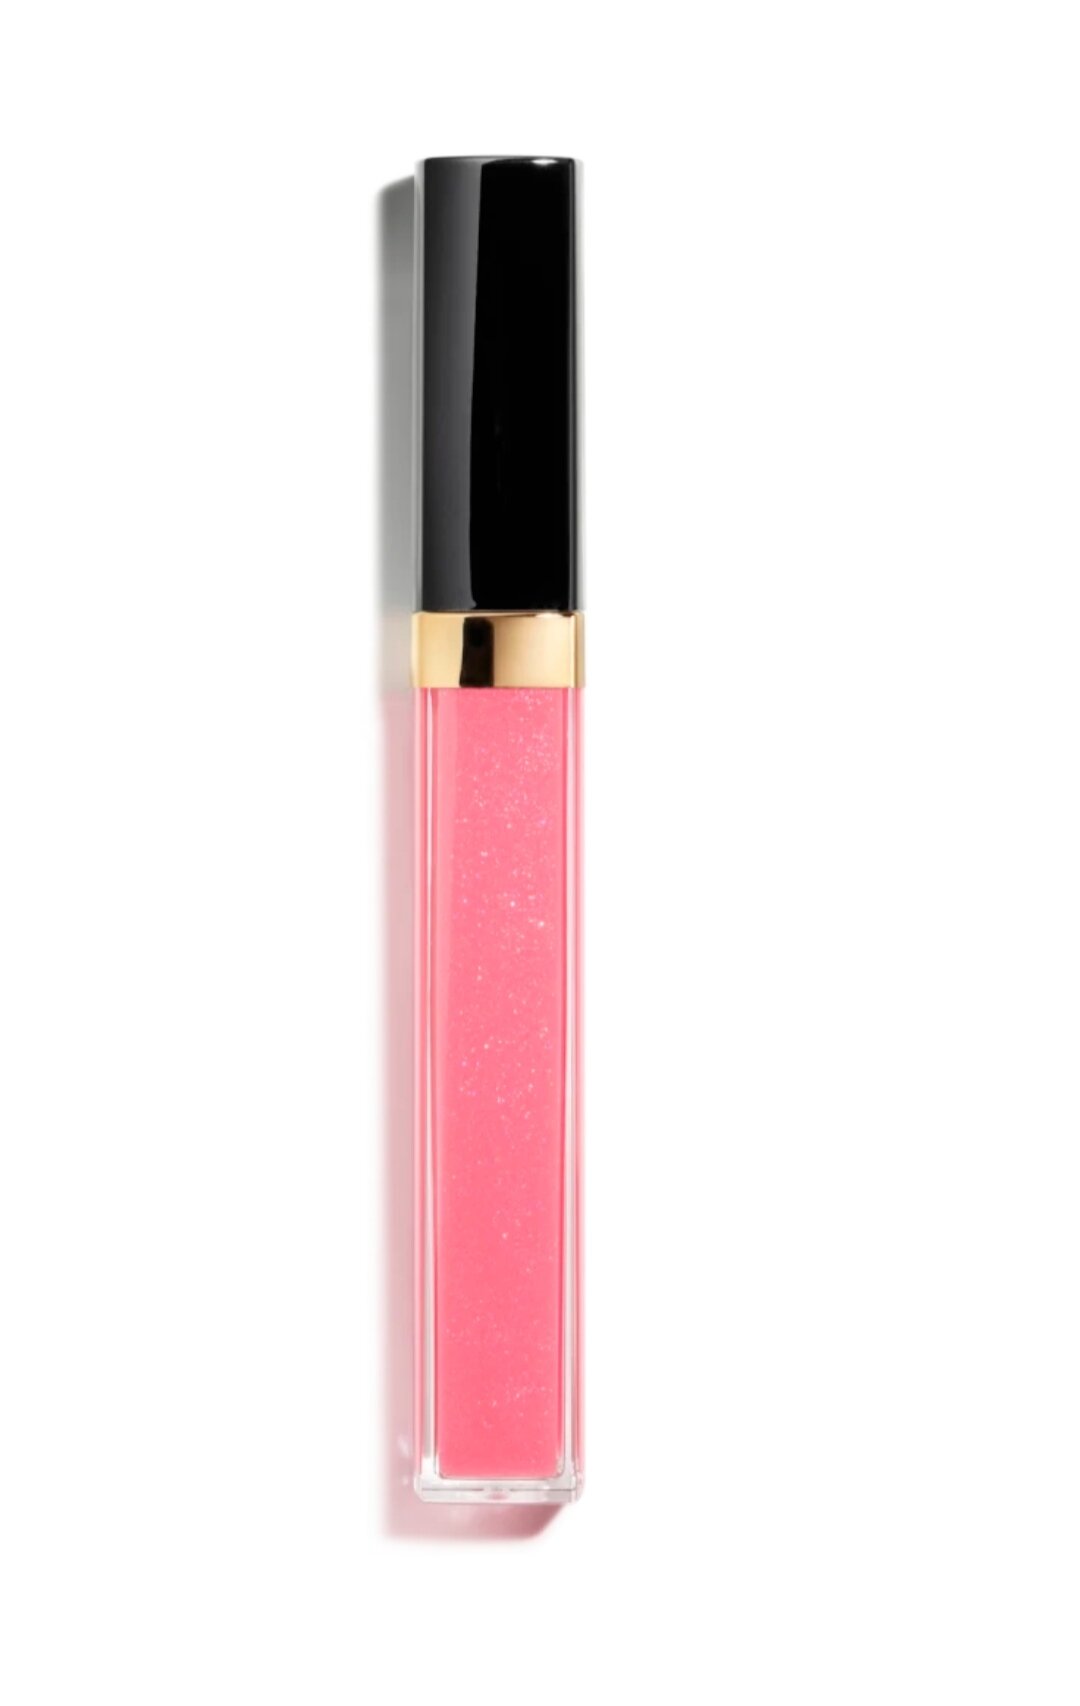 Chanel Увлажняющий ультраглянцевый блеск для губ Rouge Coco Gloss, 728 Rose Pulpe